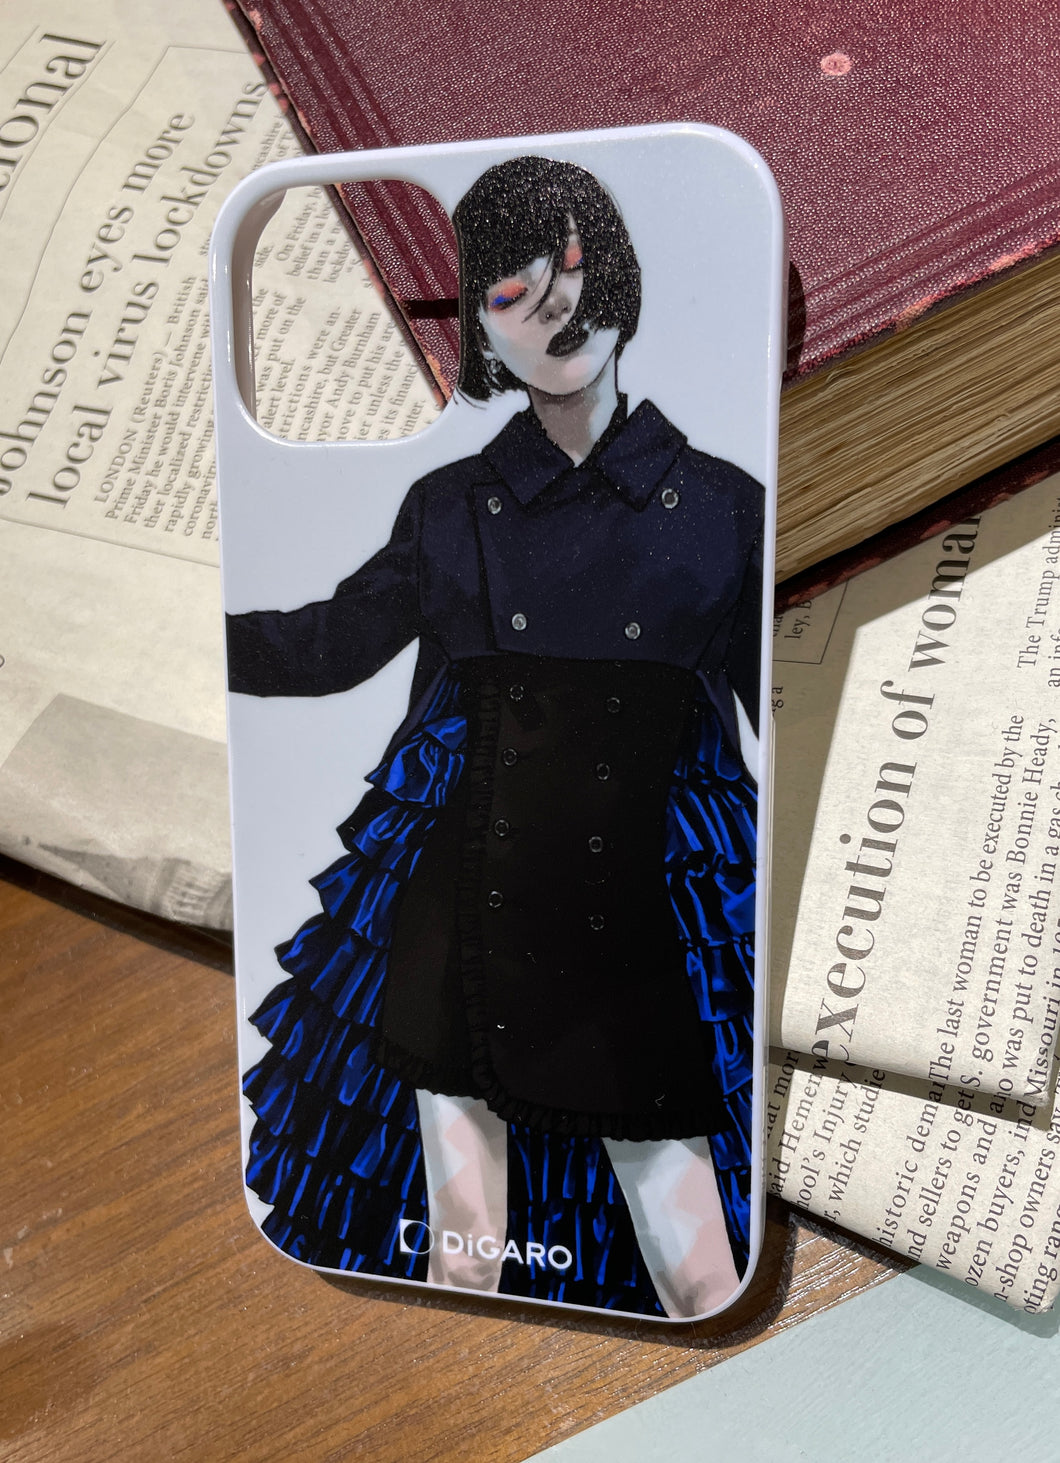 "Exposure" Kori Aoki DiGARO limited smartphone case -Xperia series-